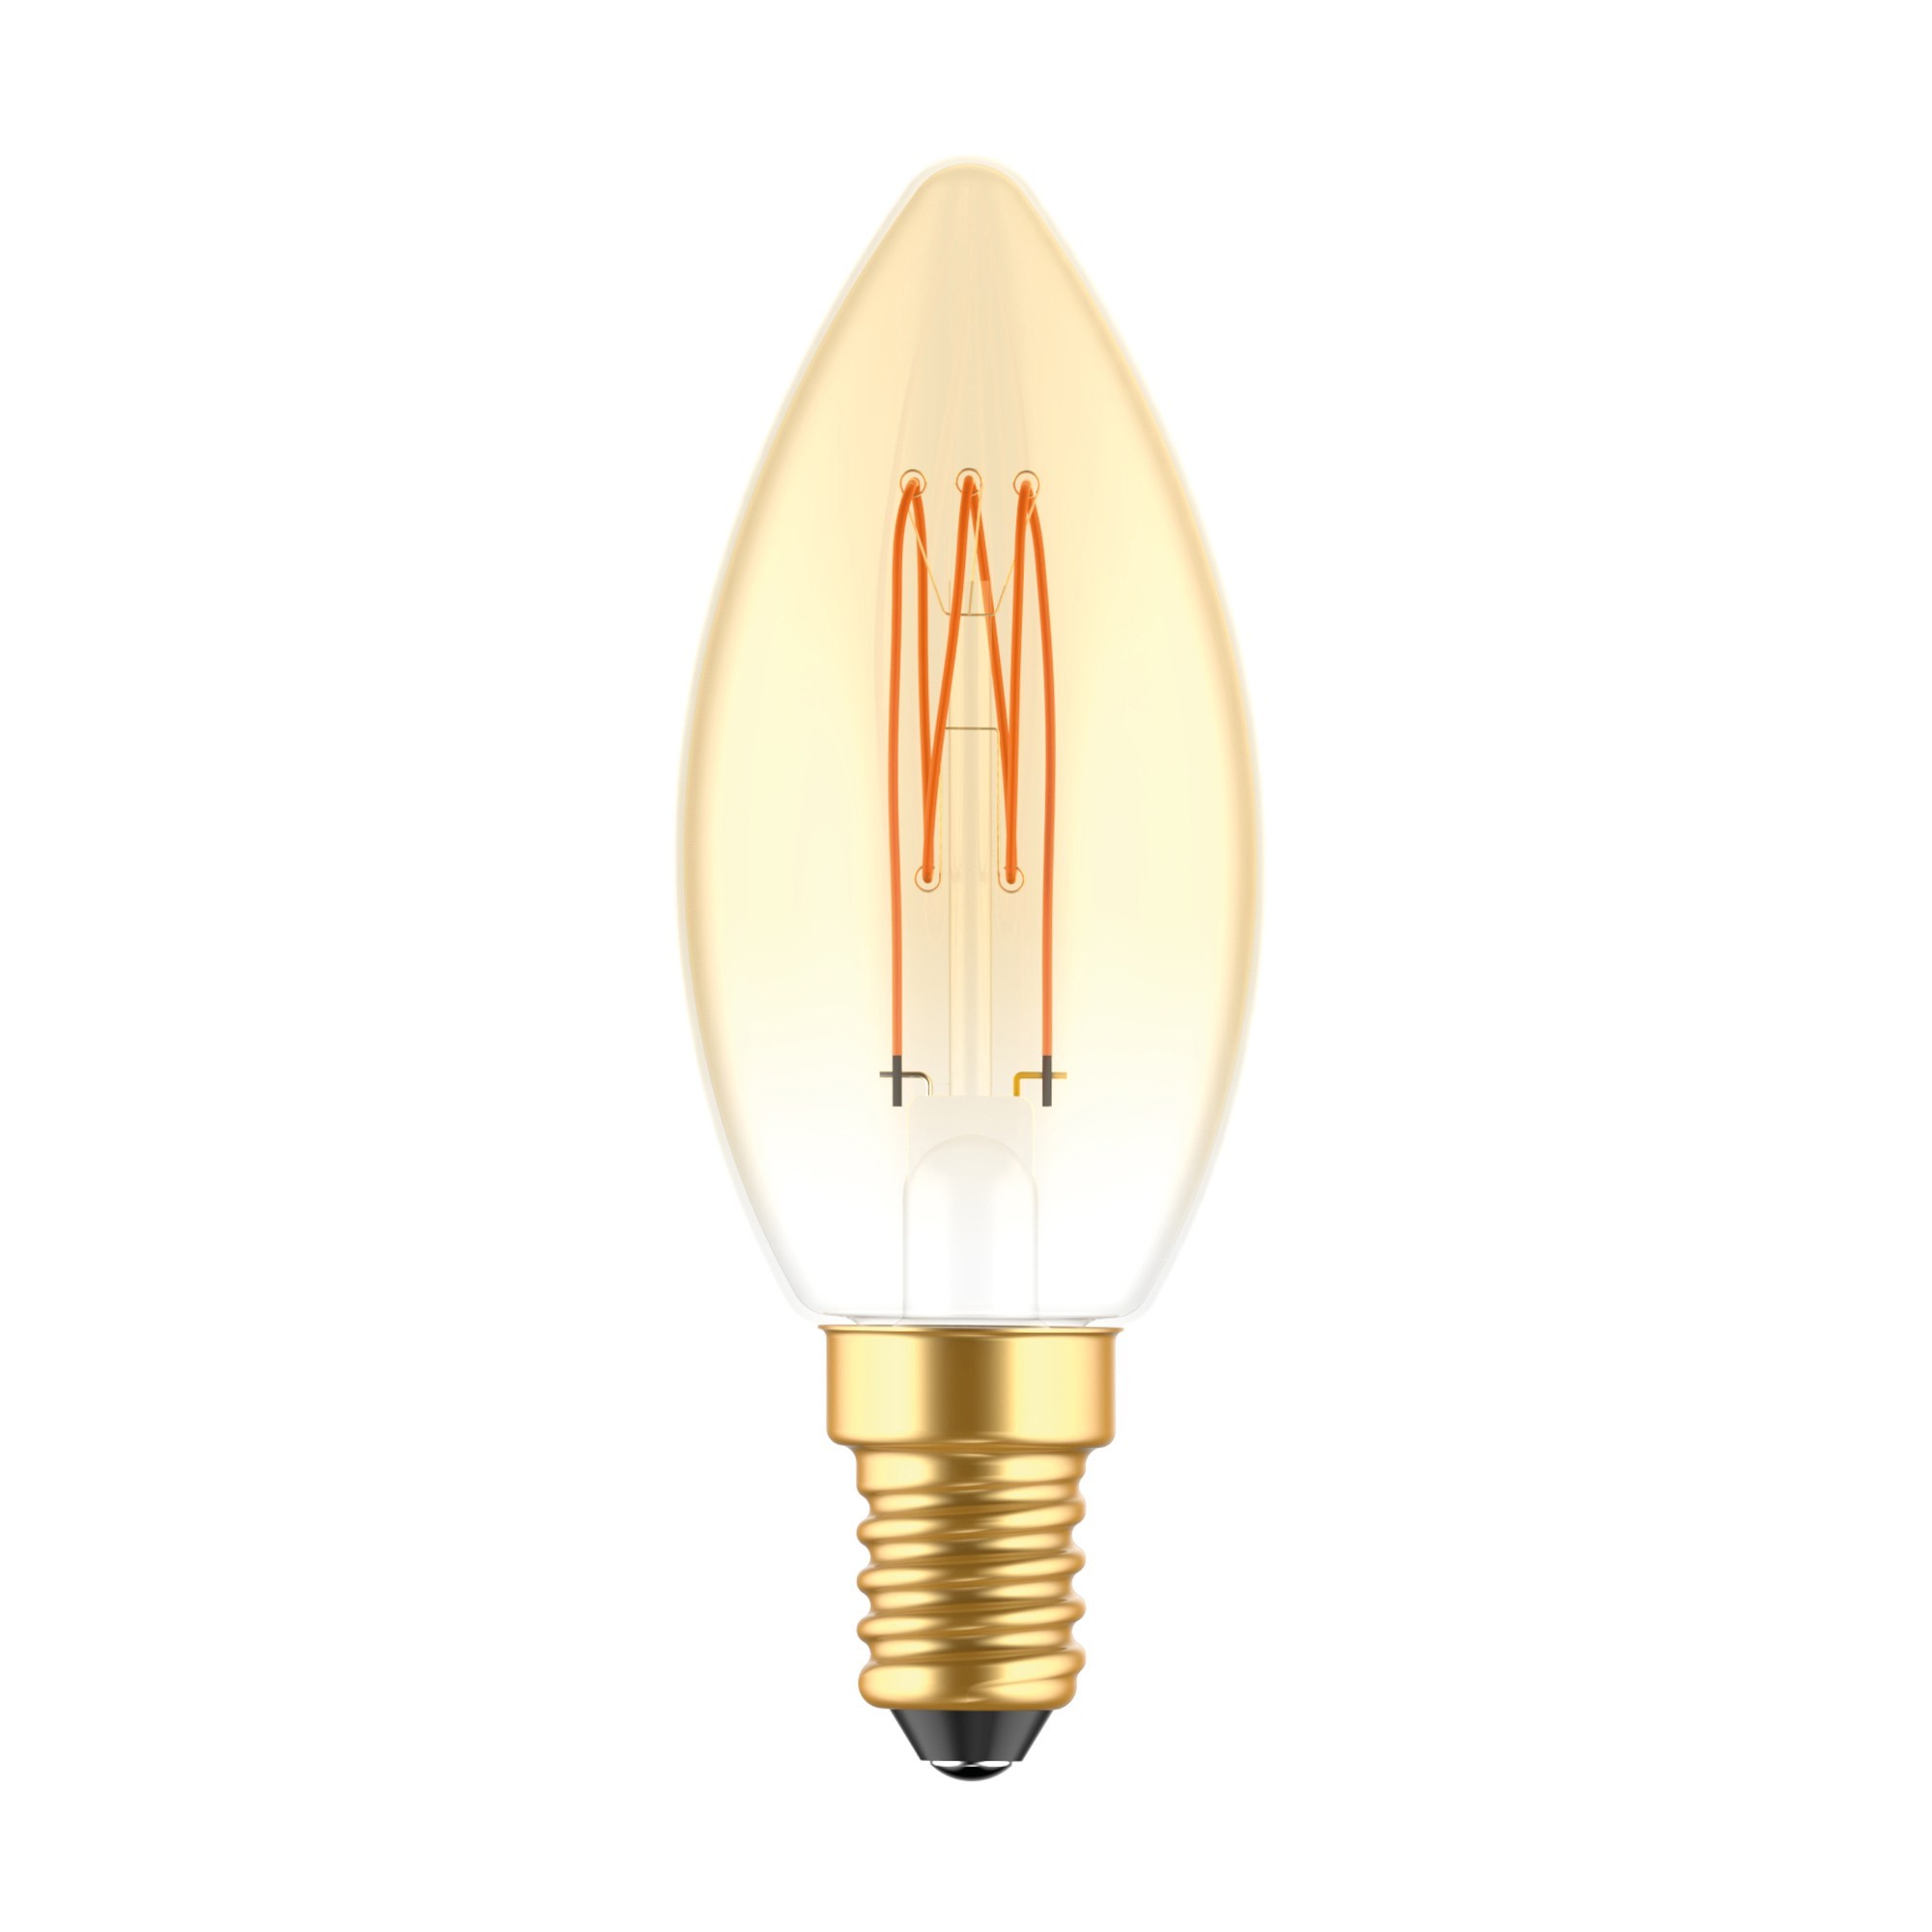 C51 - LED Light Bulb C35, E14, 3,5W, 2700K, 300Lm, with extra slim vertical filament, golden glass